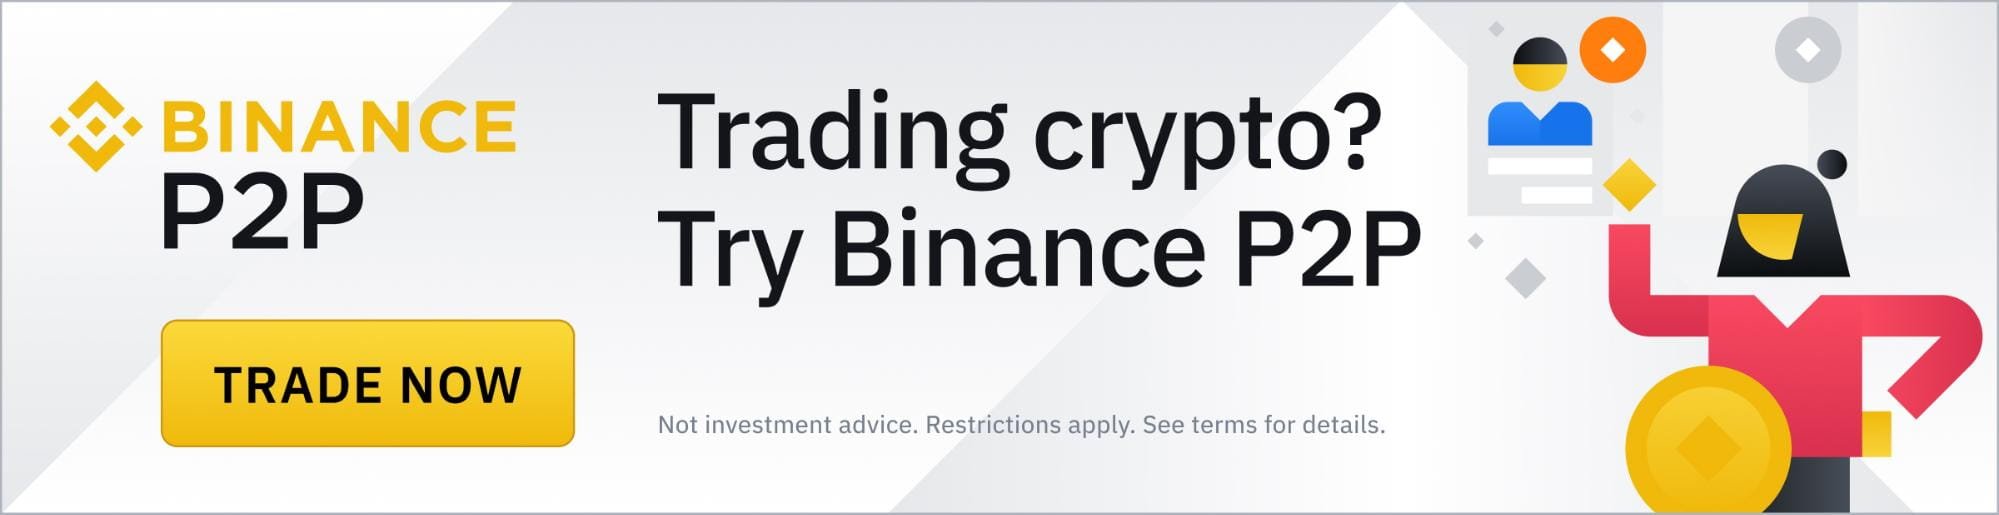 Trading Crypto? Try Binance P2P